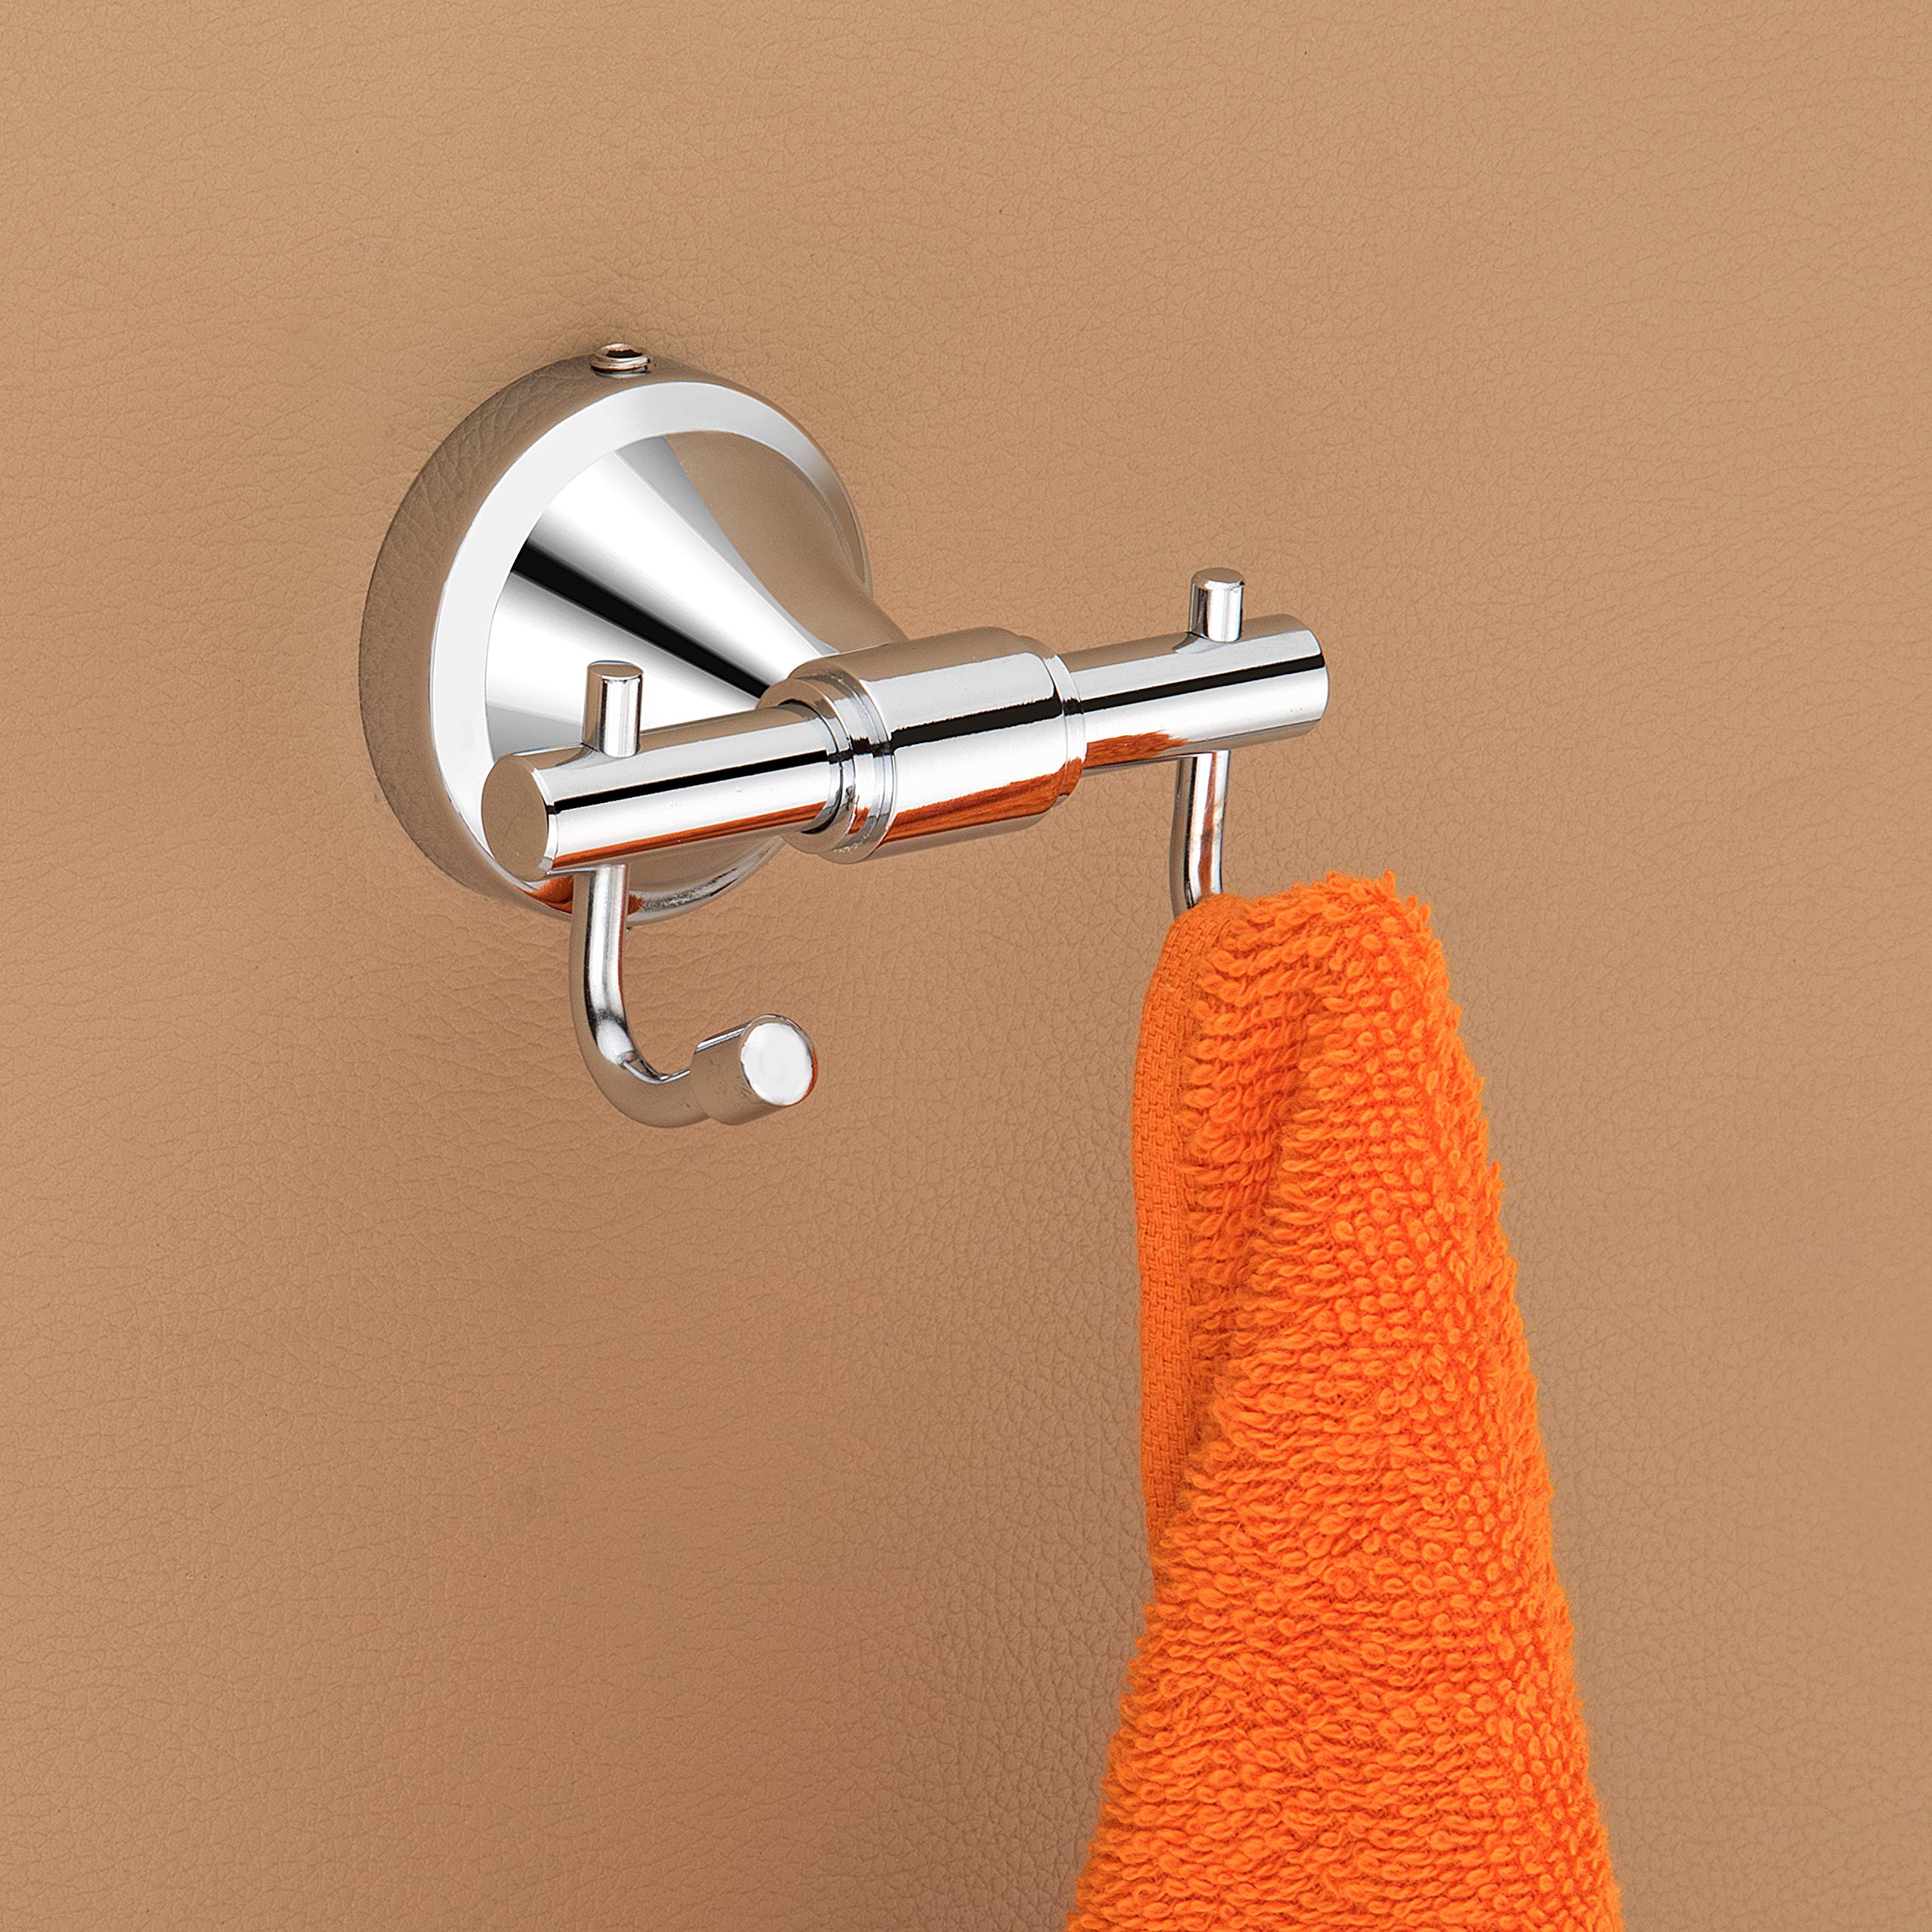 Plantex Stainless Steel 304 Grade Bathroom Accessories Set / Bathroom Hanger for Towel / Towel Bar / Napkin Ring / Tumbler Holder / Soap Dish / Robe Hook (Niko - Pack of 5)